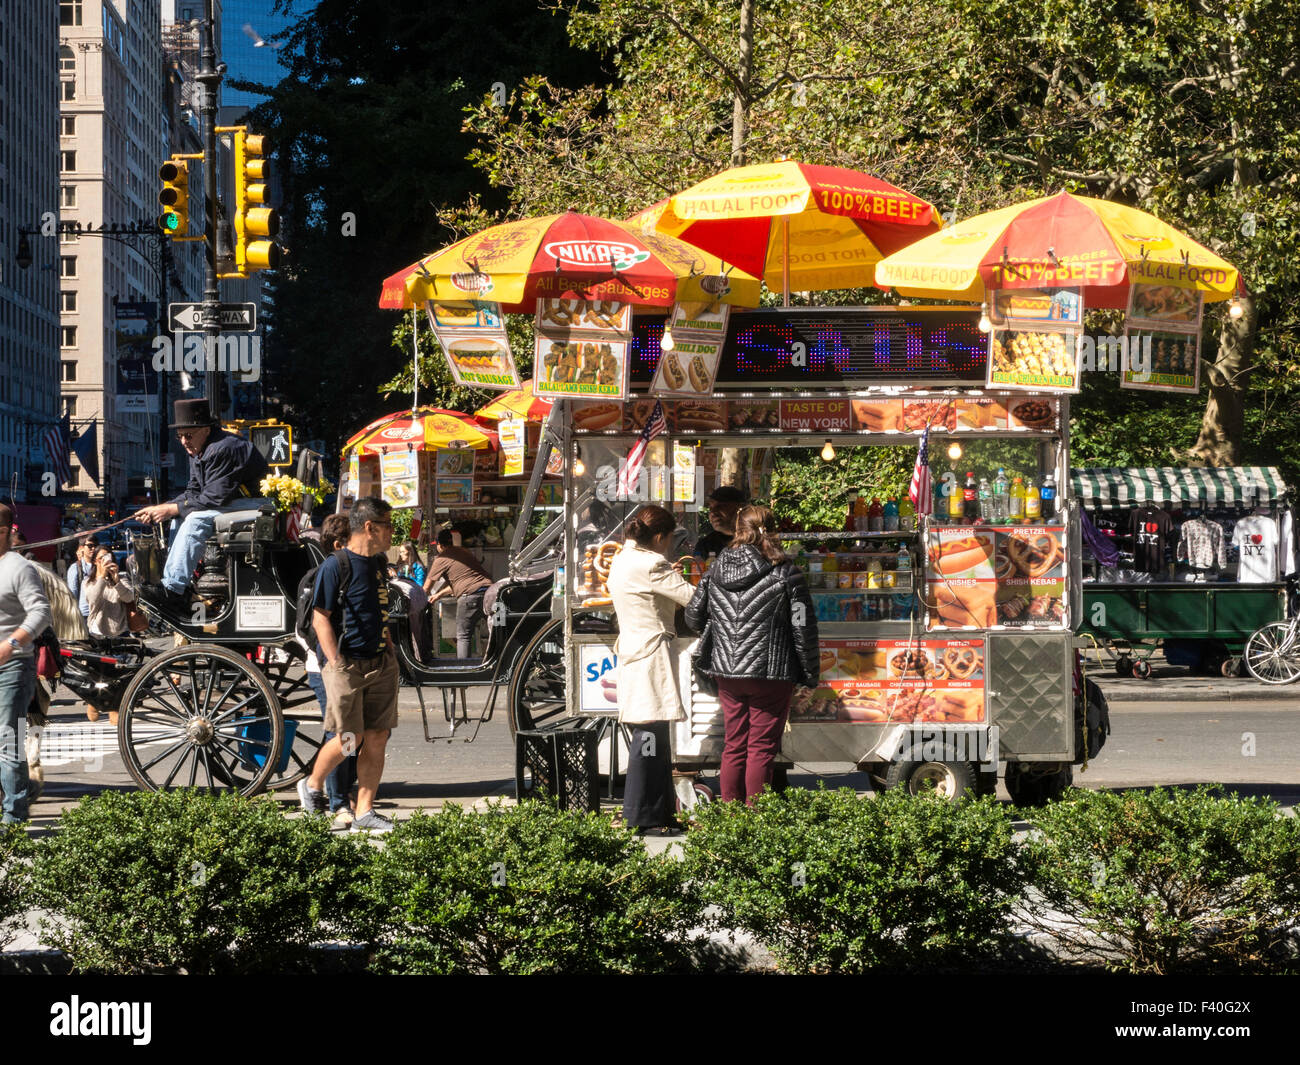 Sidewalk Hot Dog Vendor Stand, Grand Army Plaza, NYC, USA Stock Photo